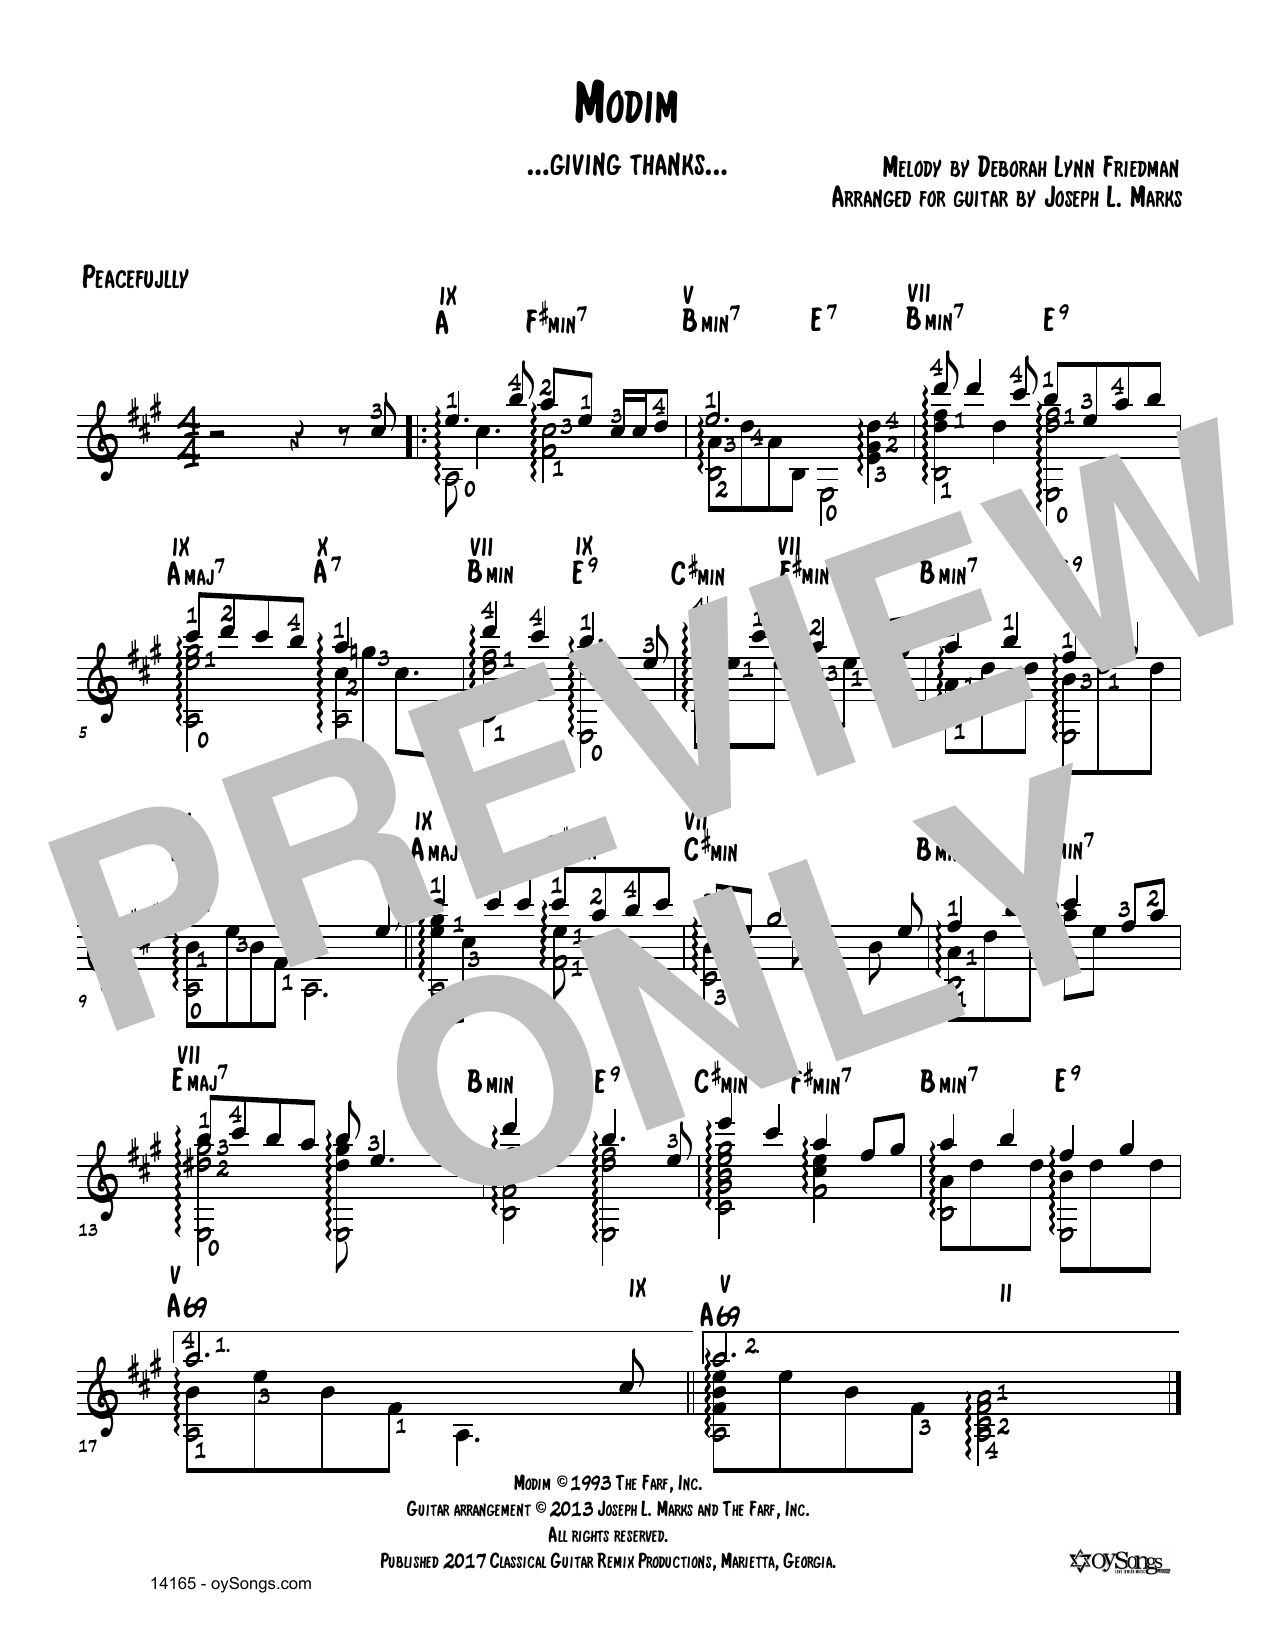 Debbie Friedman Modim (arr. Joe Marks) Sheet Music Notes & Chords for Guitar Tab - Download or Print PDF